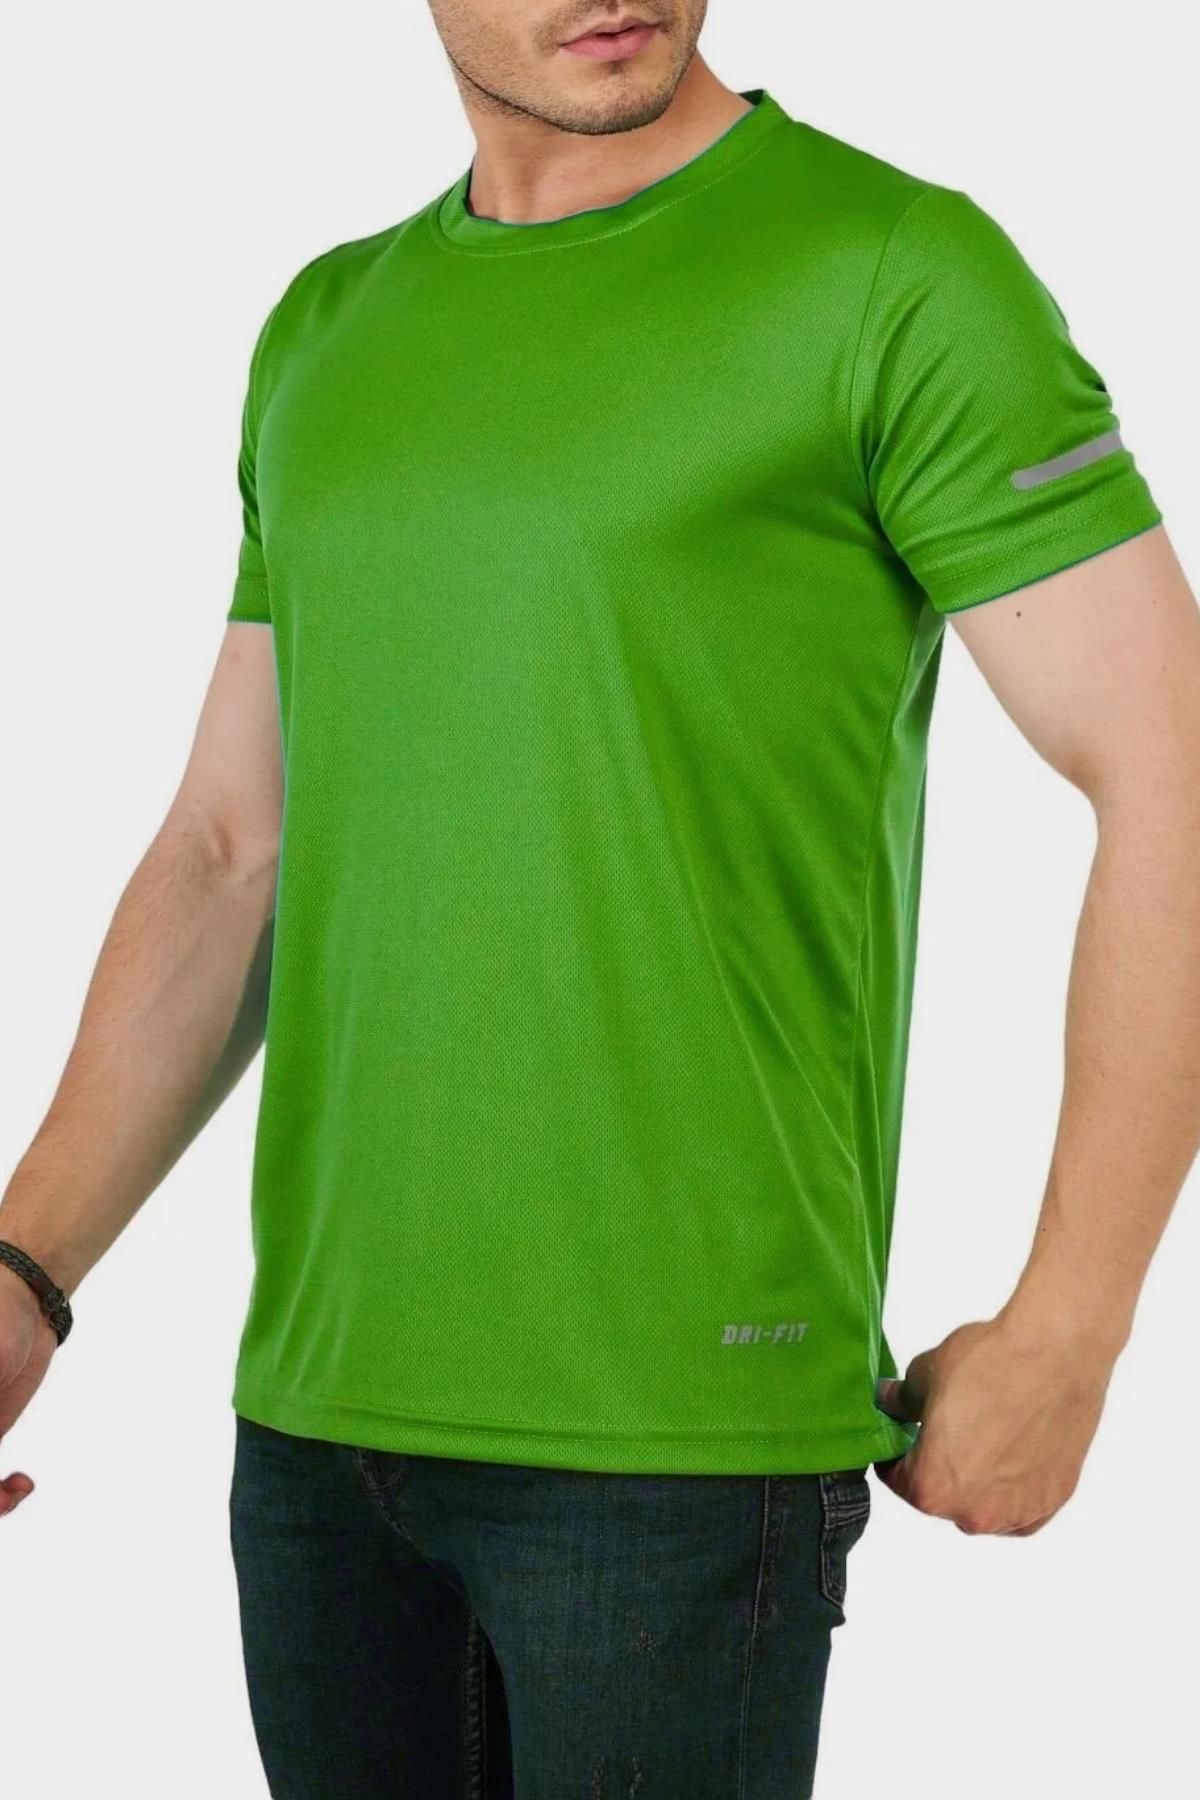 Ghassy Co Ghassy Co. Erkek Nem Emici Hızlı Kuruma Atletik Teknik Performans T-shirt